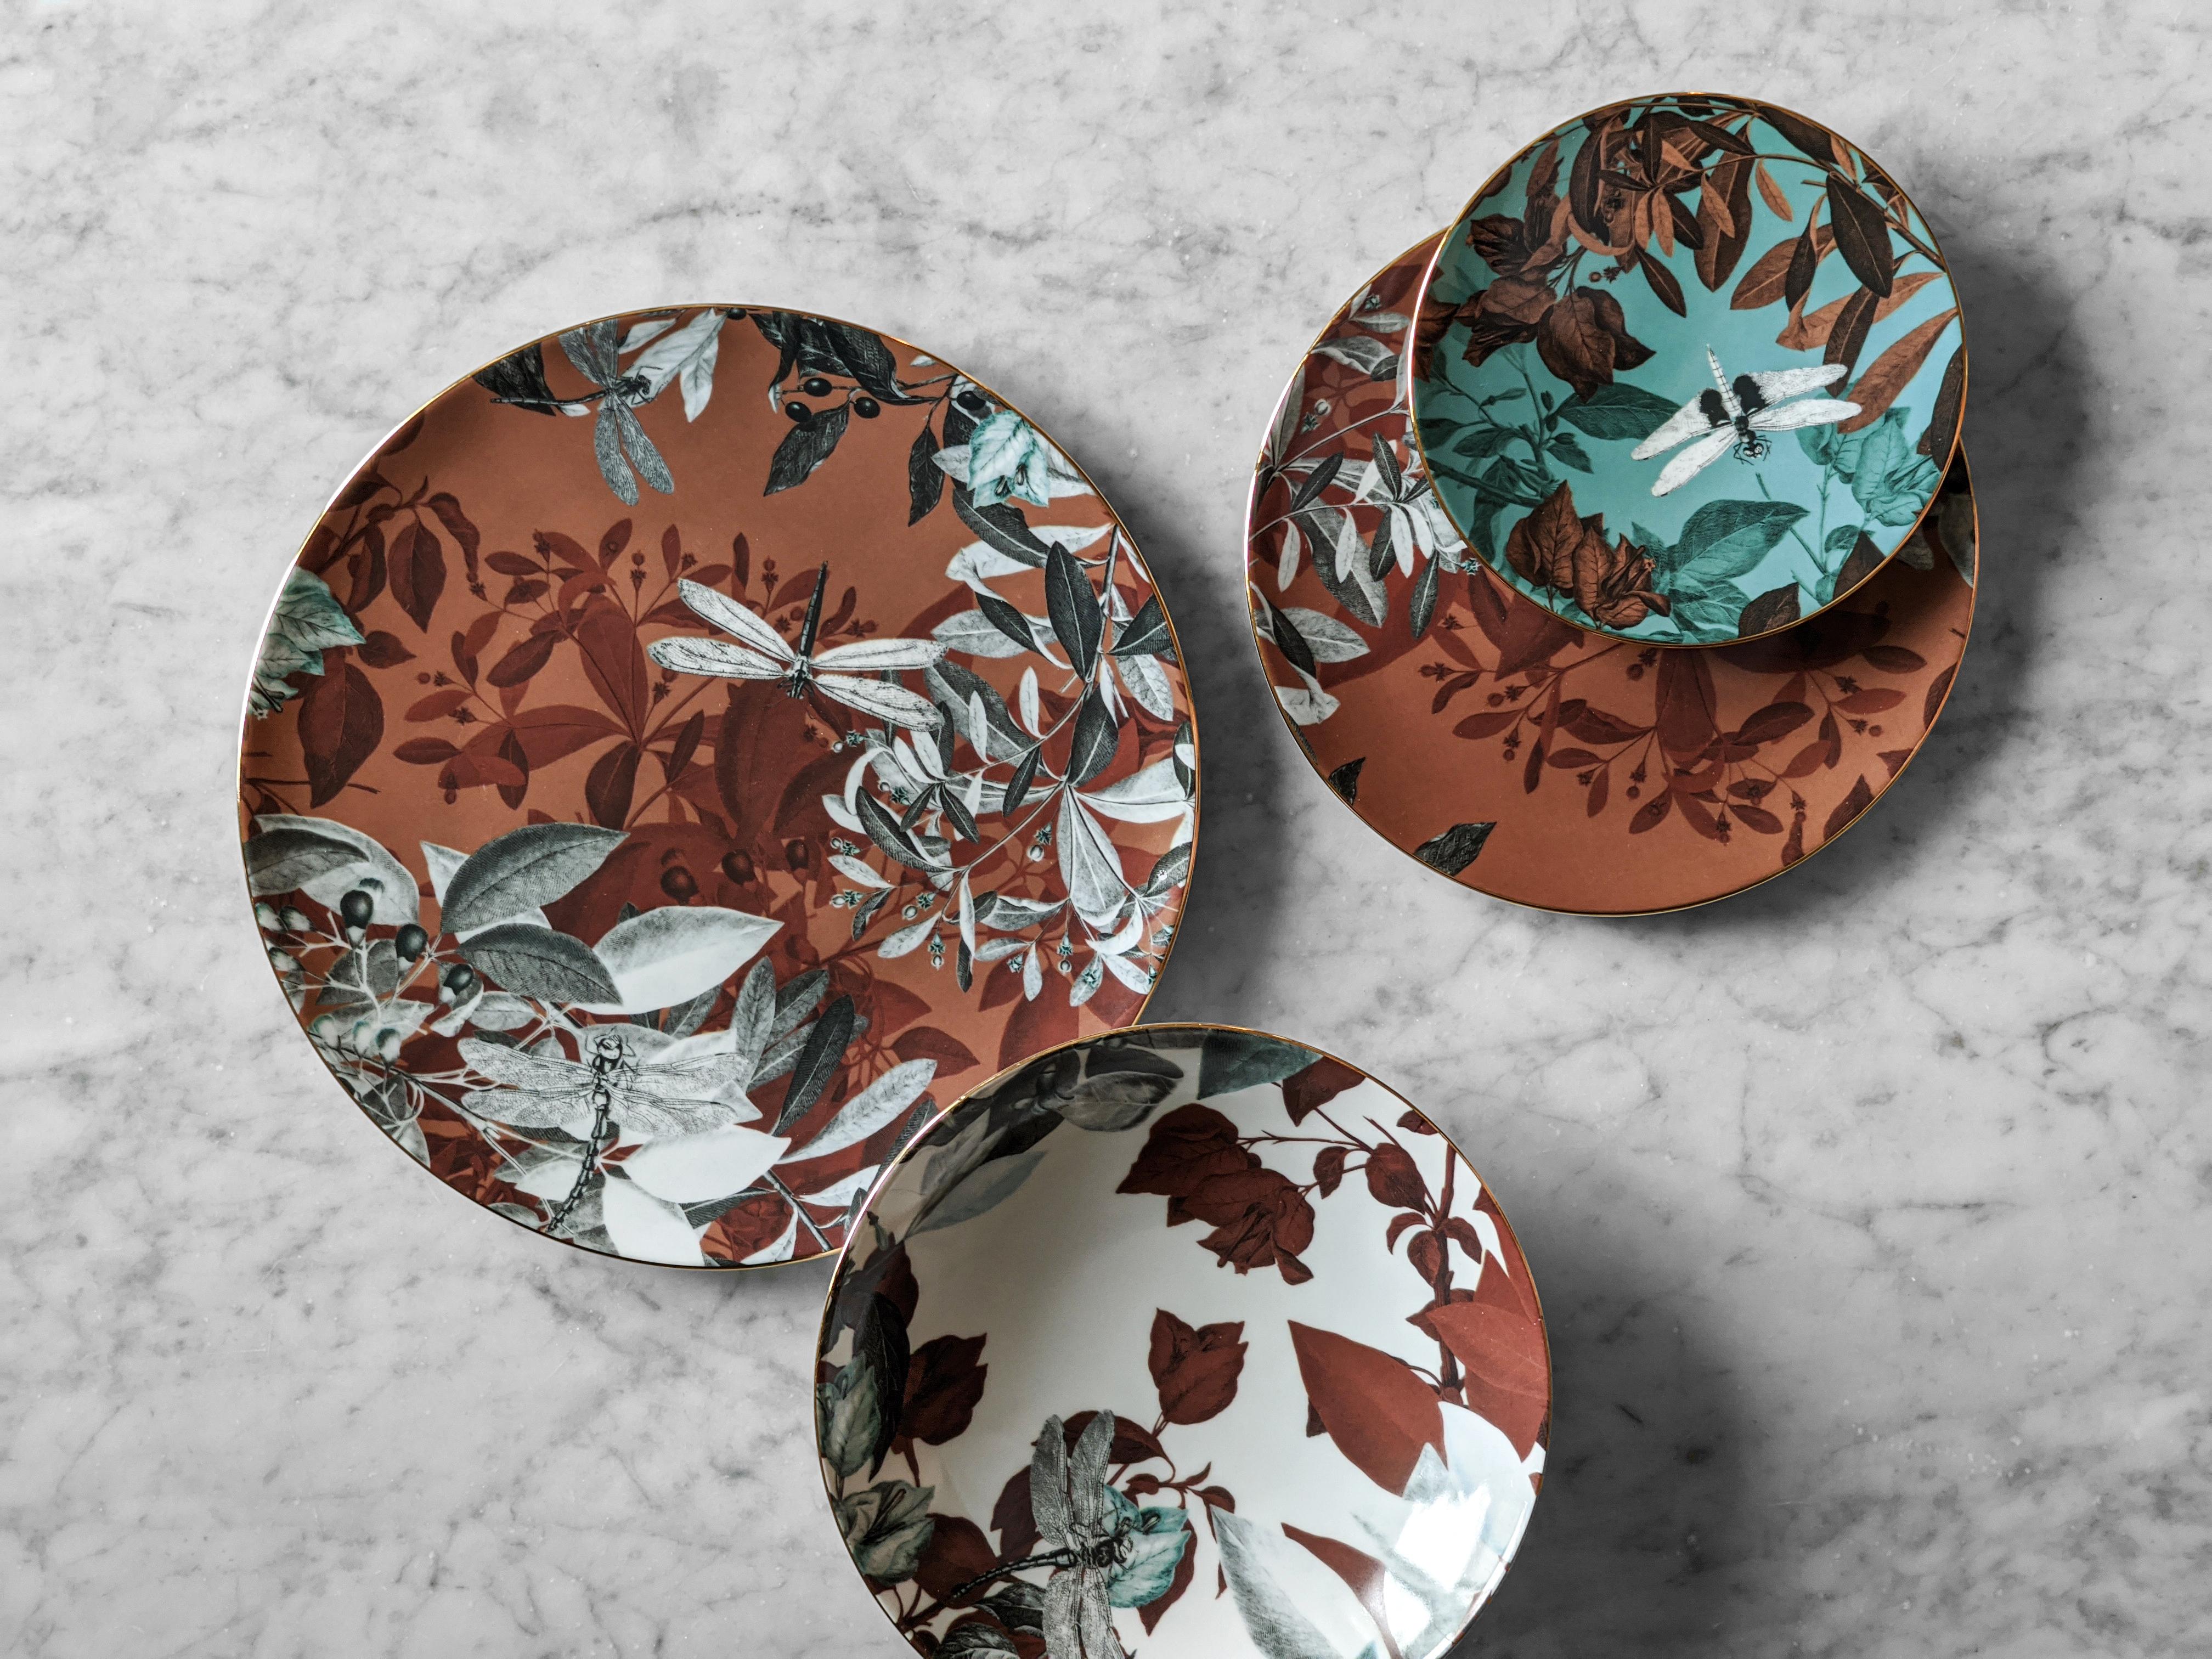 Black Dragon, Six Contemporary Porcelain Dessert Plates with Decorative Design For Sale 4